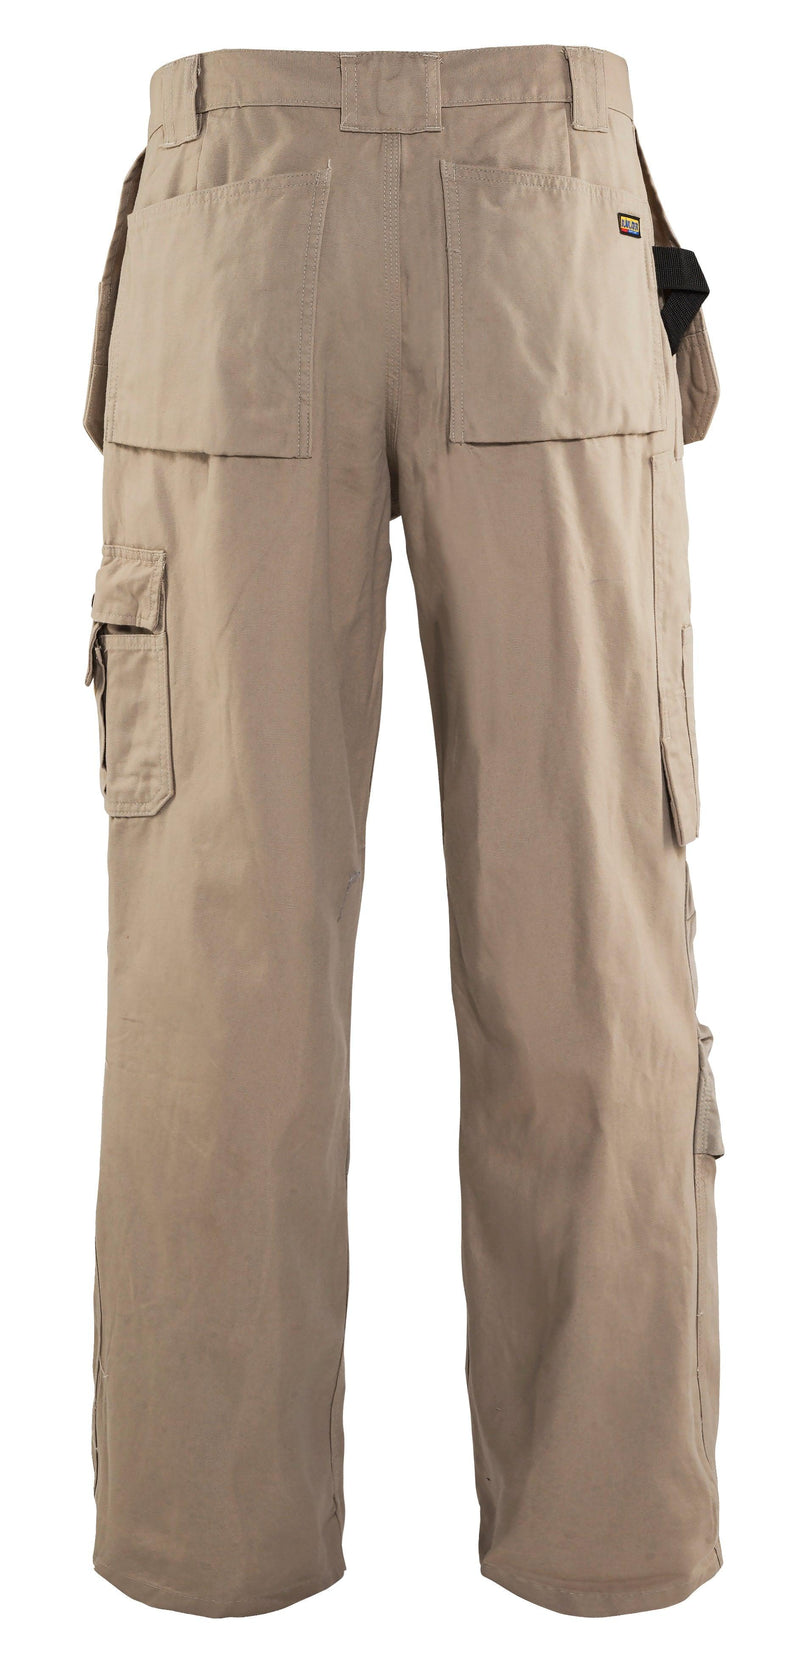 Blaklader 1630 8oz Bantam Work Pants with Utility Pockets - Stone - Trusted Gear Company LLC